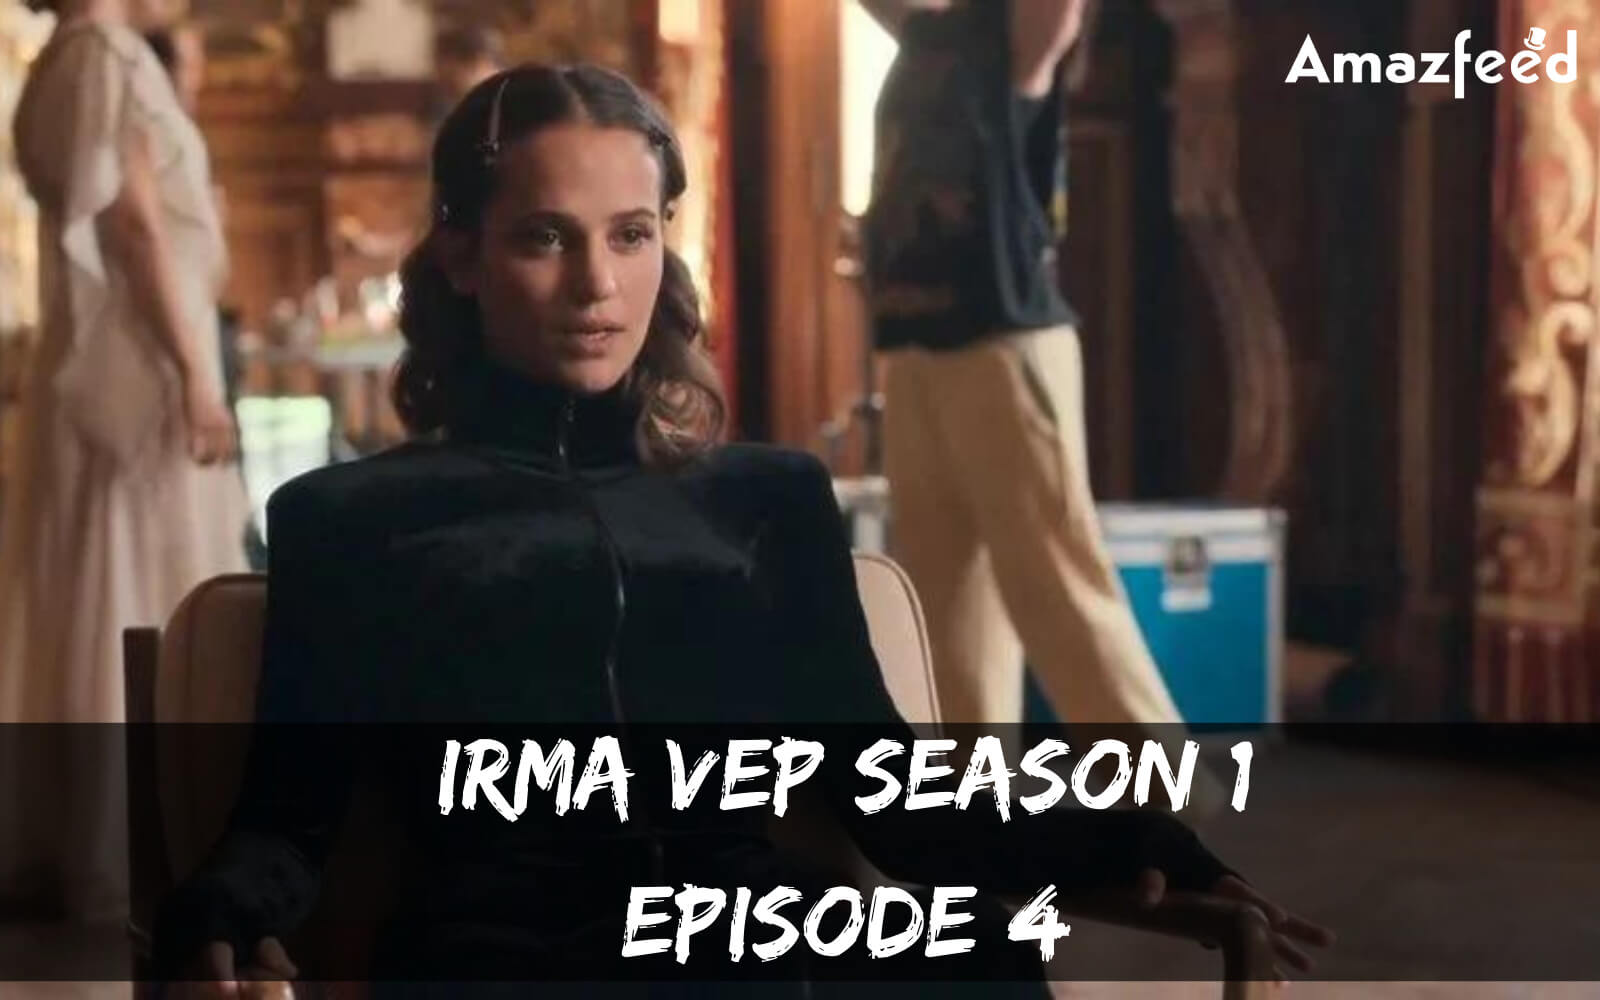 Irma Vep Season 1 Episode 4 release date